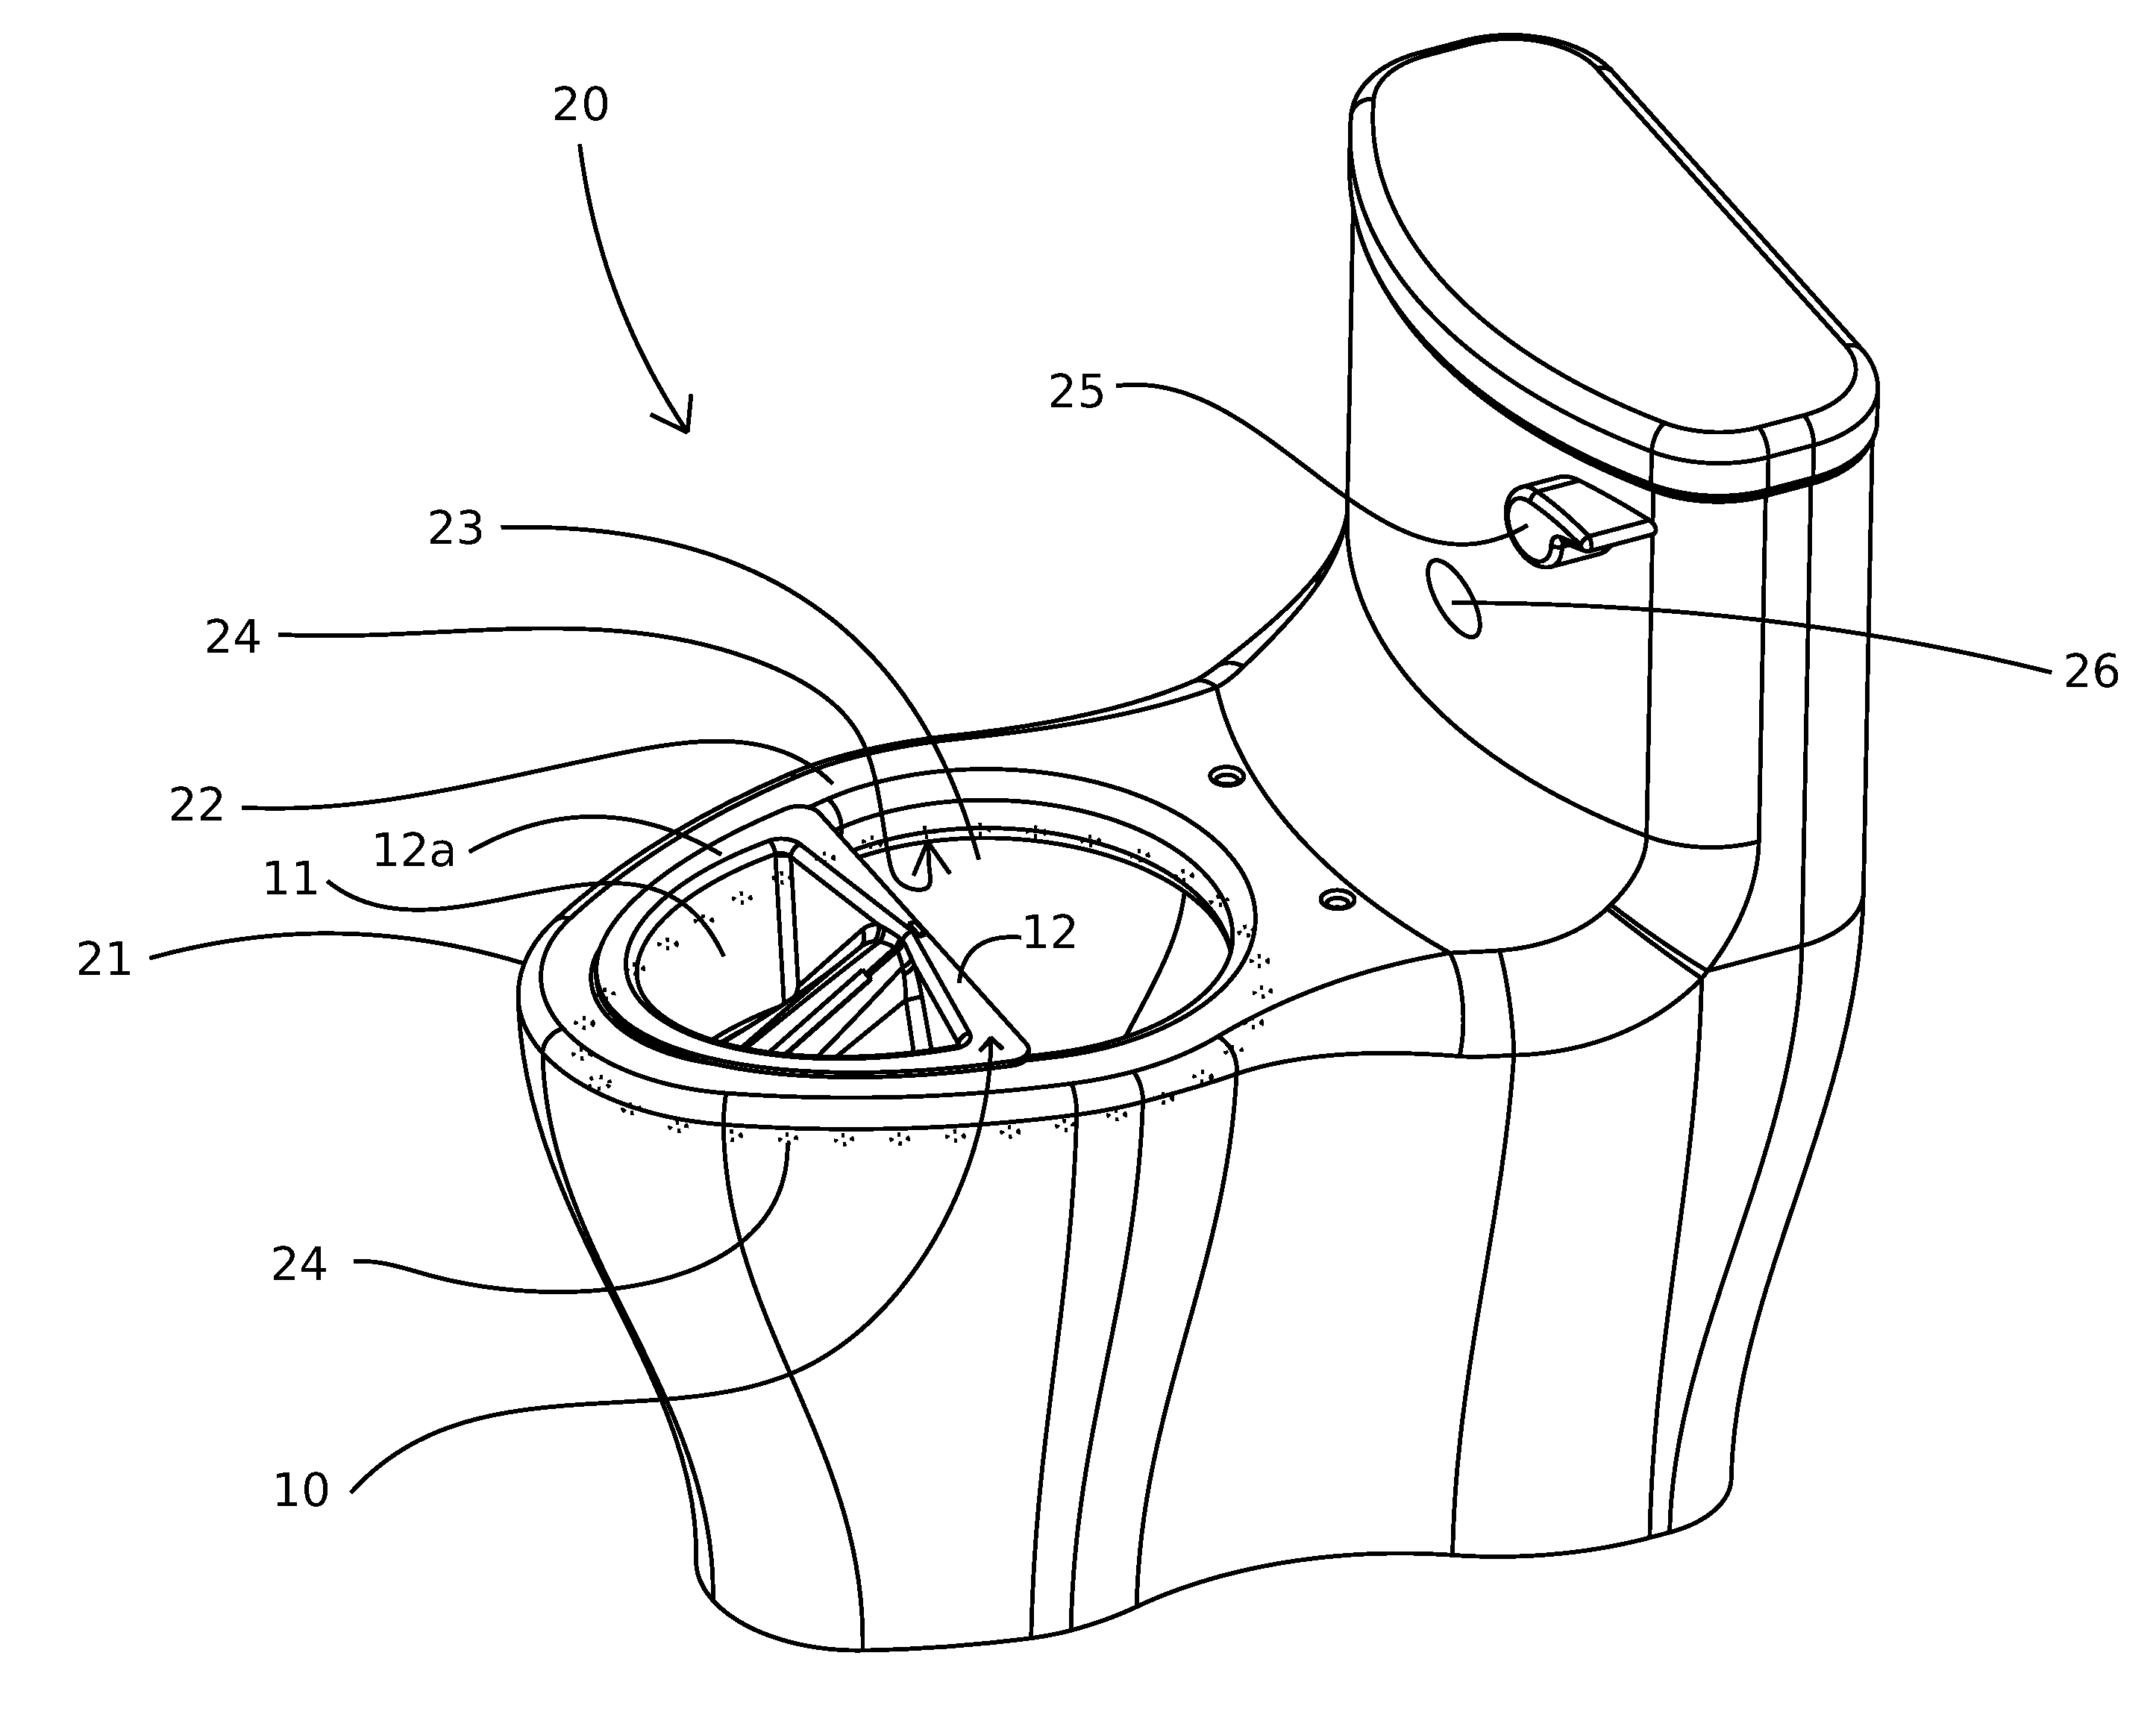 Urine specimen capture and analysis device